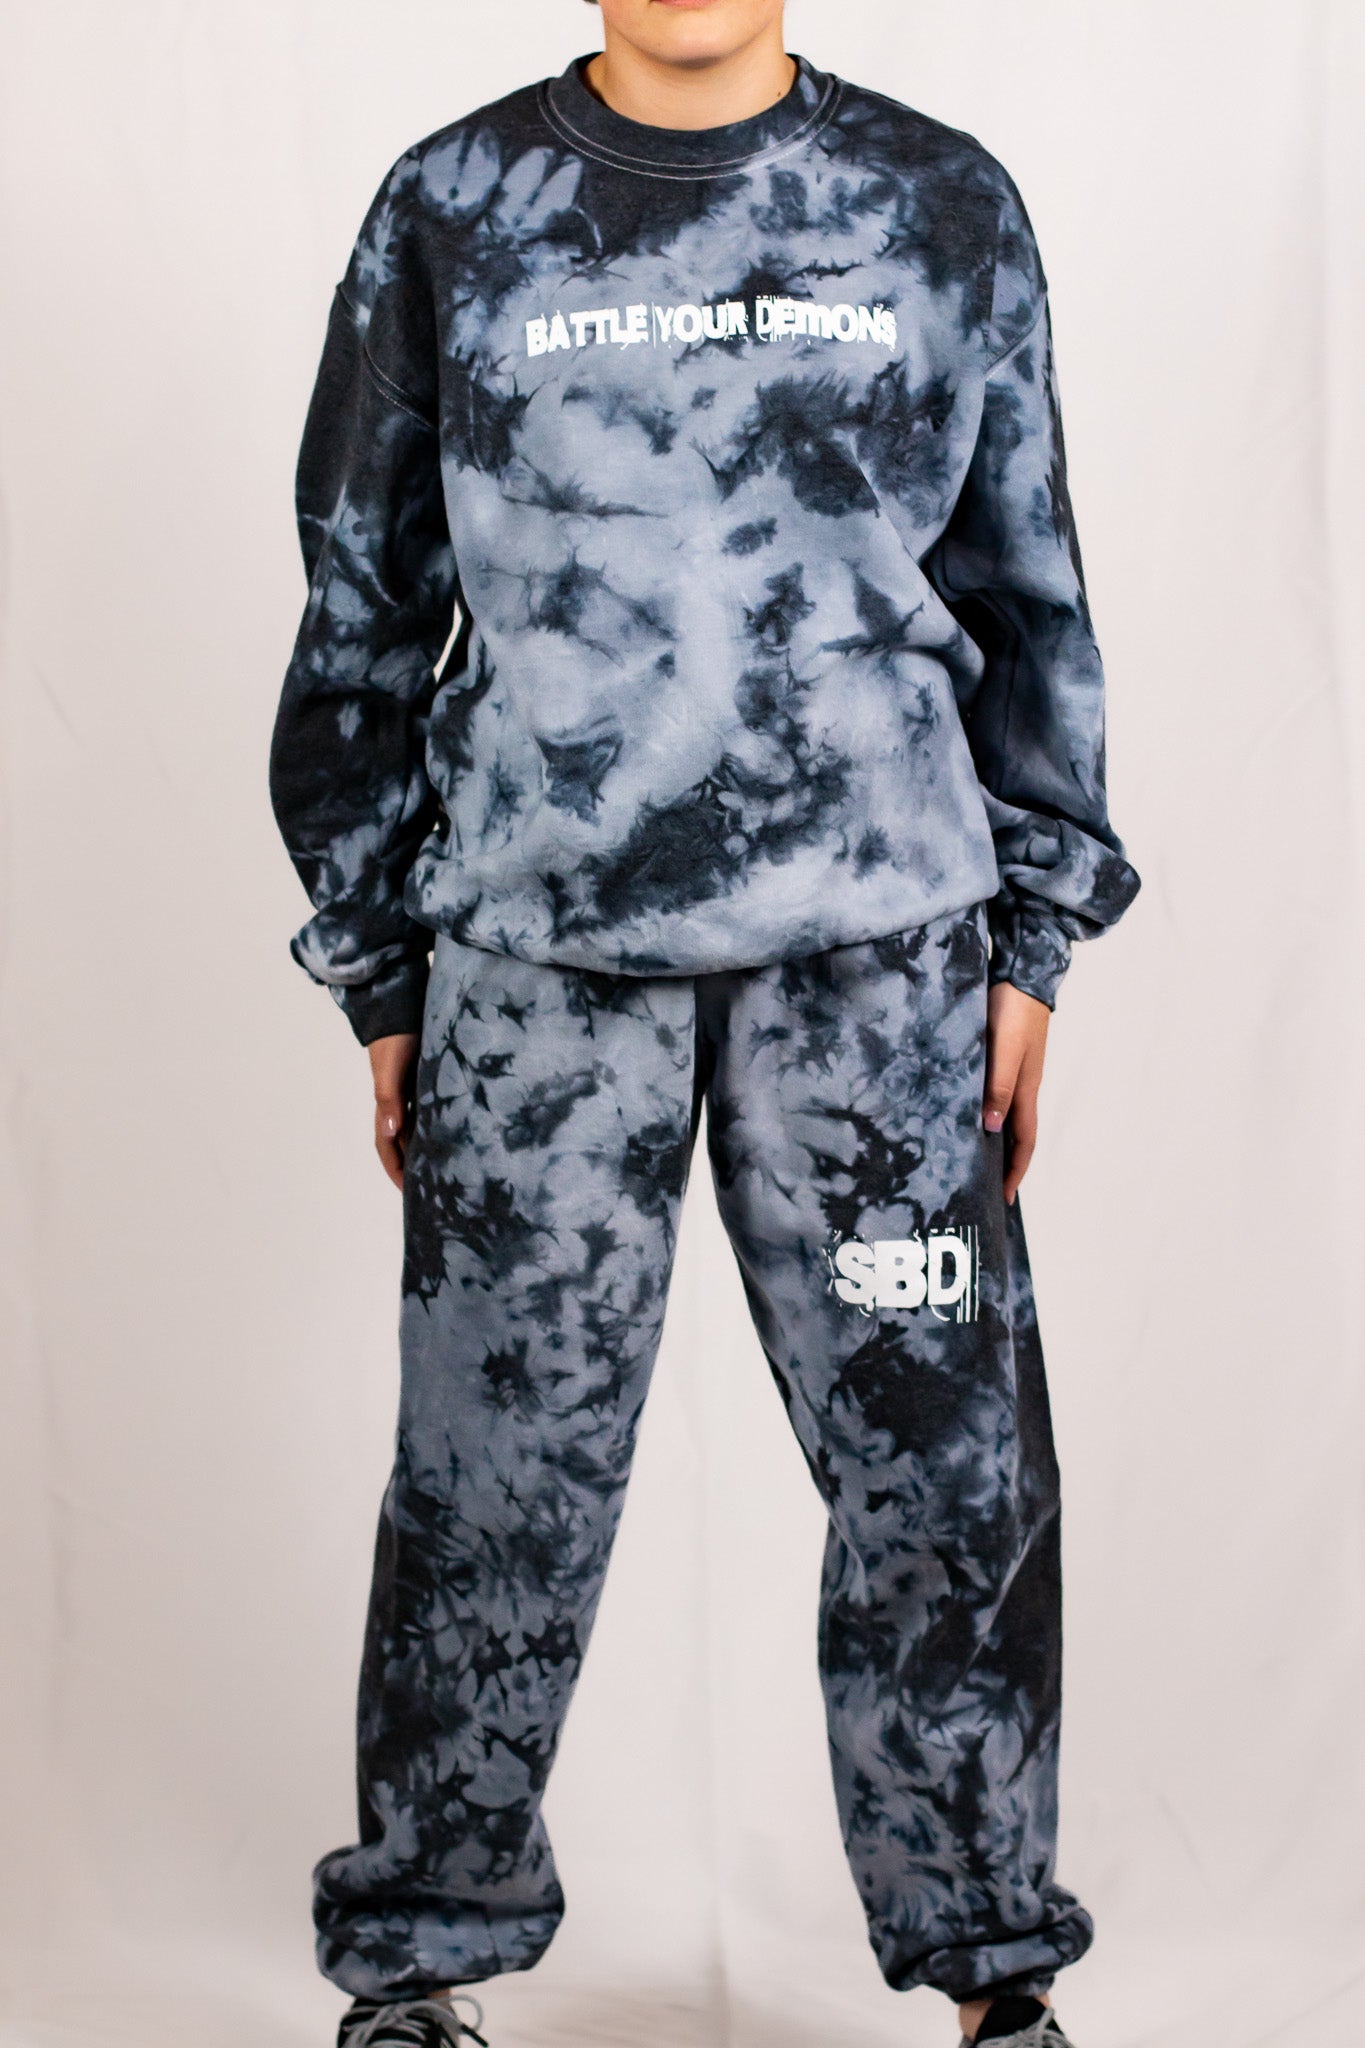 Unisex Black Crystal Tie Dye Crewneck Sweatshirt (Matching Set)